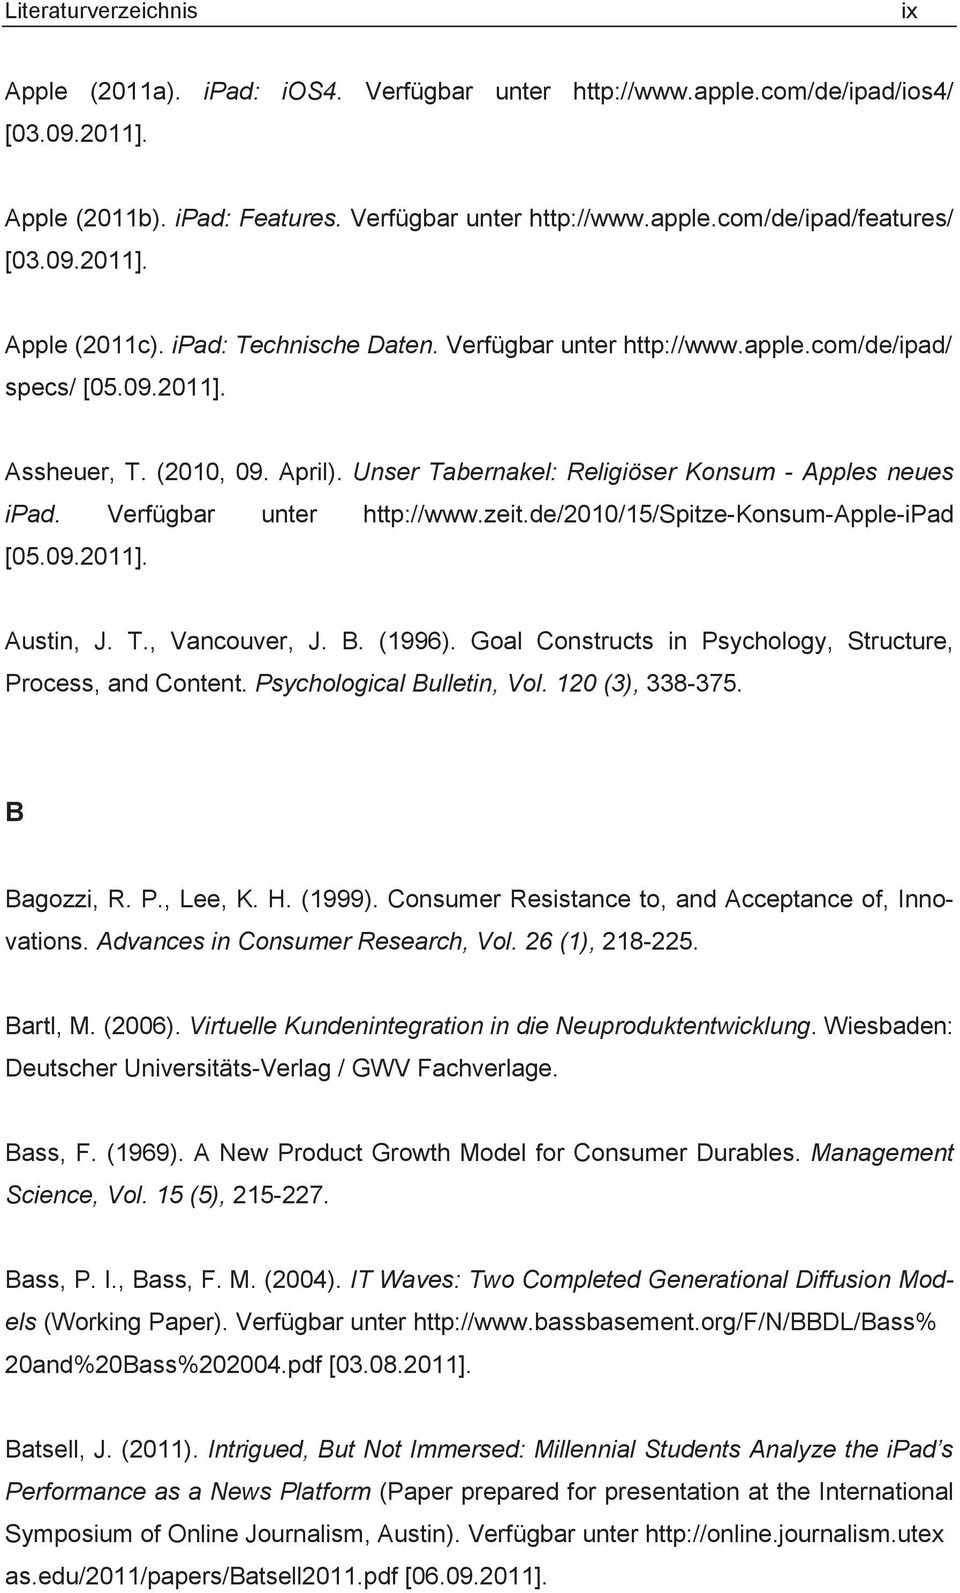 Verfügbar unter http://www.zeit.de/2010/15/spitze-konsum-apple-ipad [05.09.2011]. Austin, J. T., Vancouver, J. B. (1996). Goal Constructs in Psychology, Structure, Process, and Content.